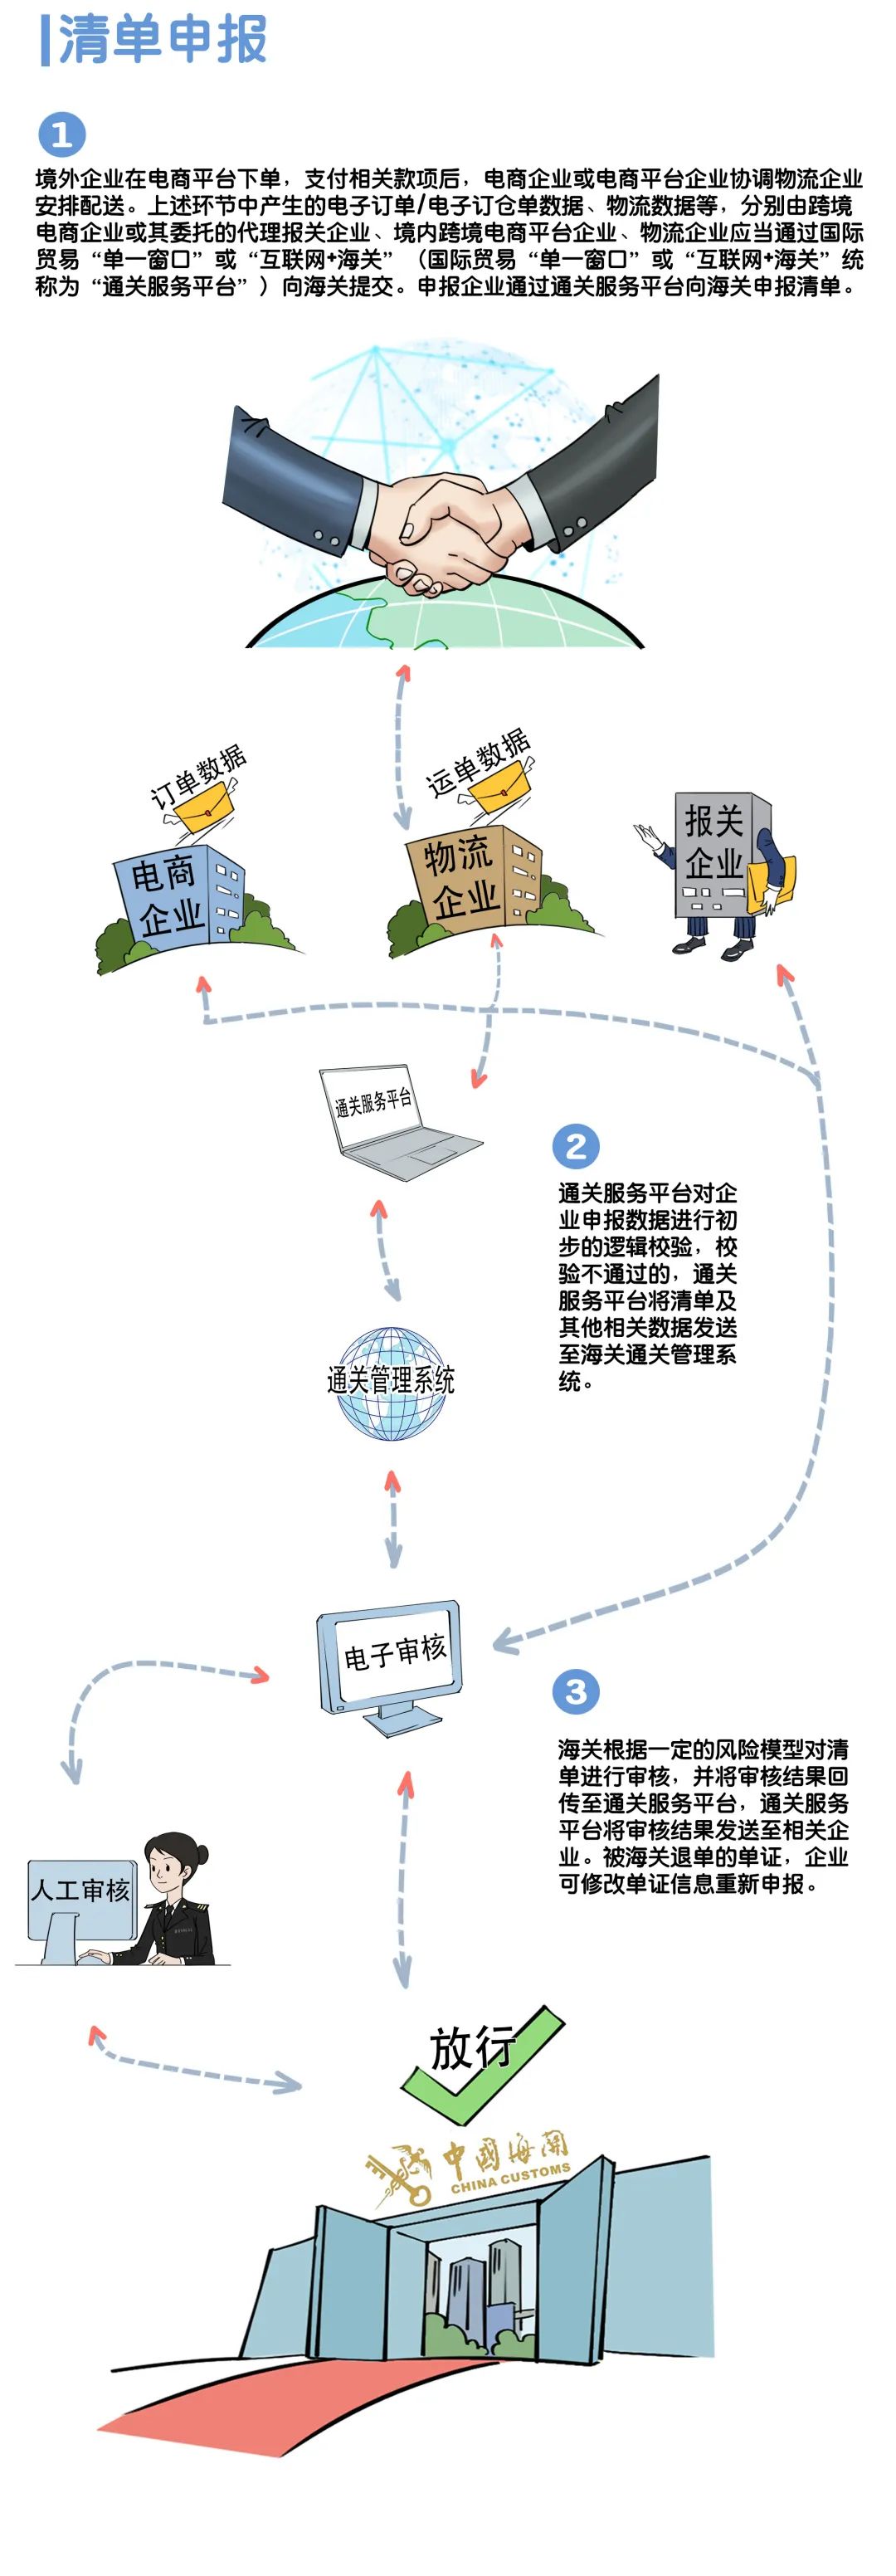 <a href='https://www.zhouxiaohui.cn/kuajing/
' target='_blank'>跨境电商</a>出口监管政策解读（解析企业对企业出口监管）-第1张图片-周小辉博客